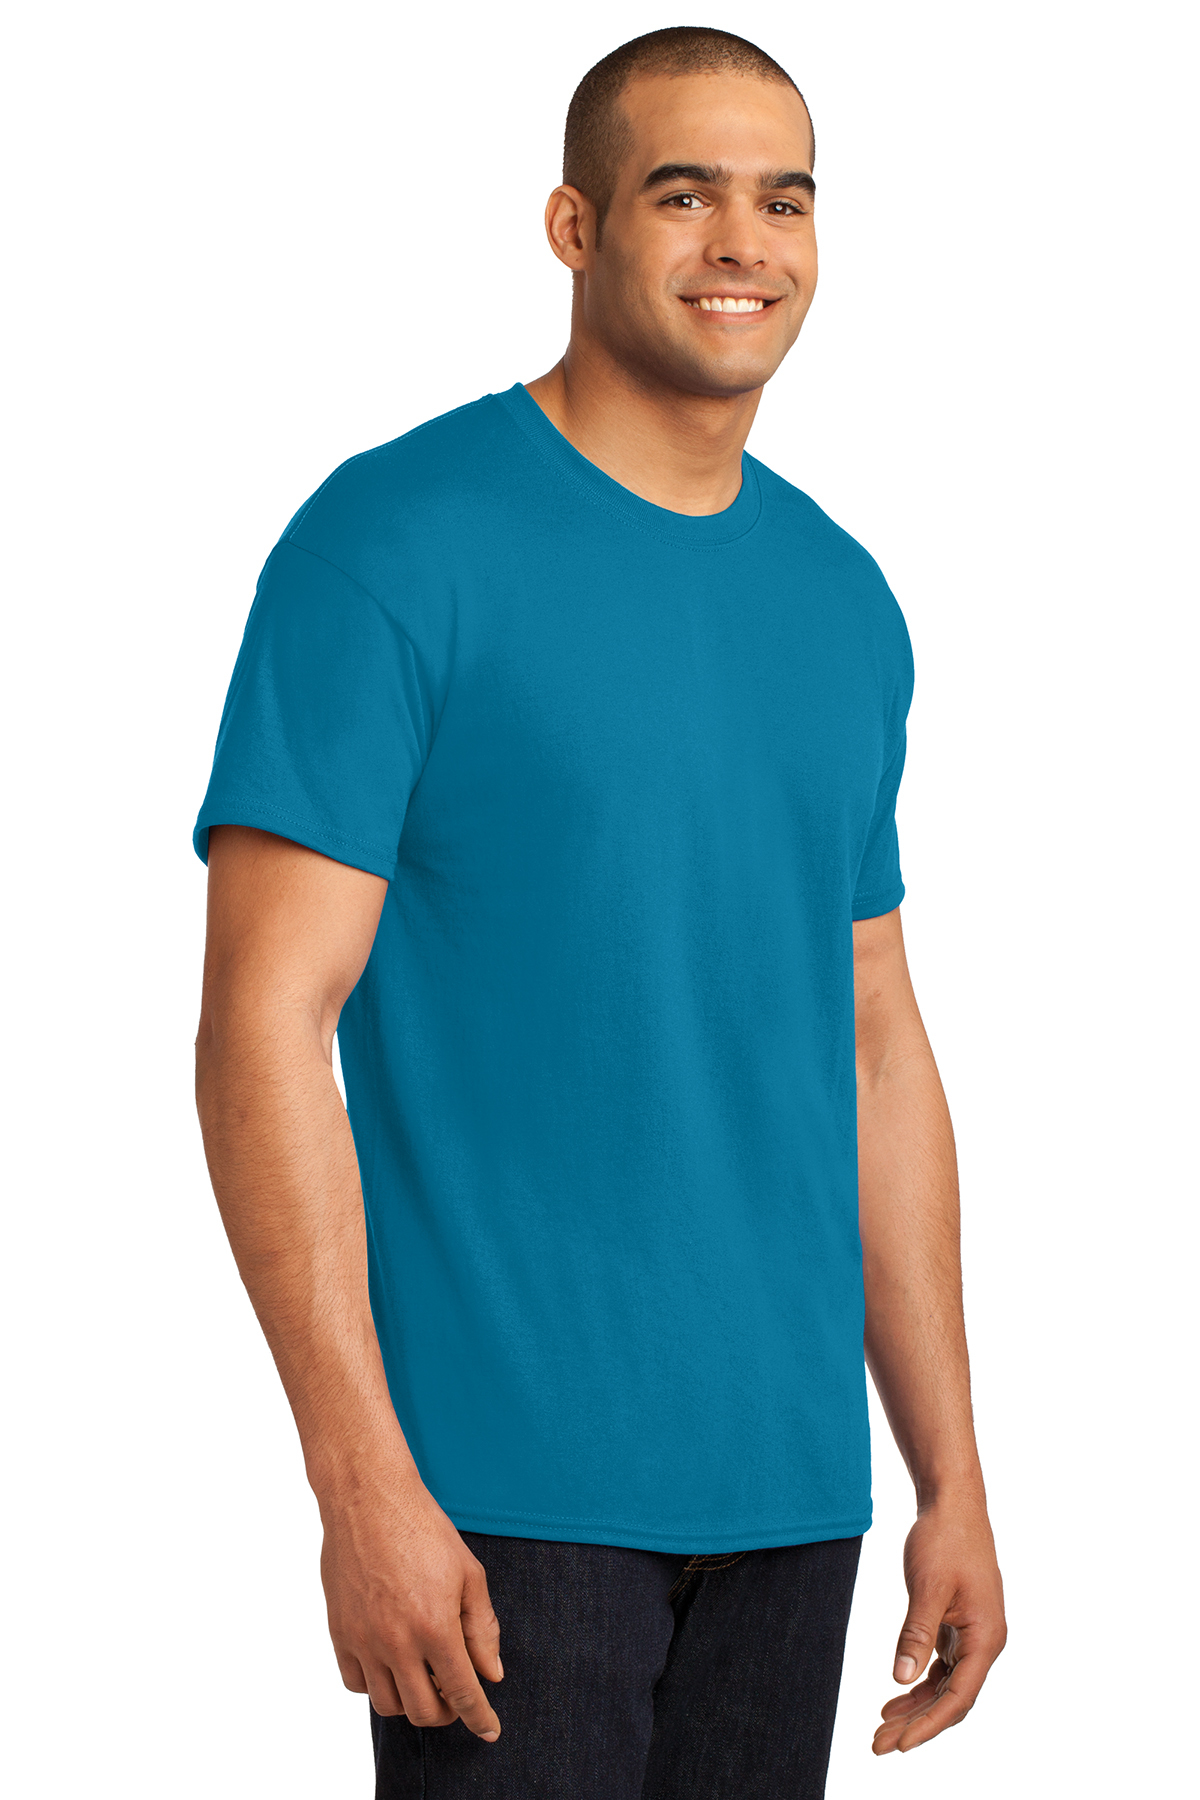 Hanes - EcoSmart 50/50 Cotton/Poly T-Shirt | Product | Online Apparel ...